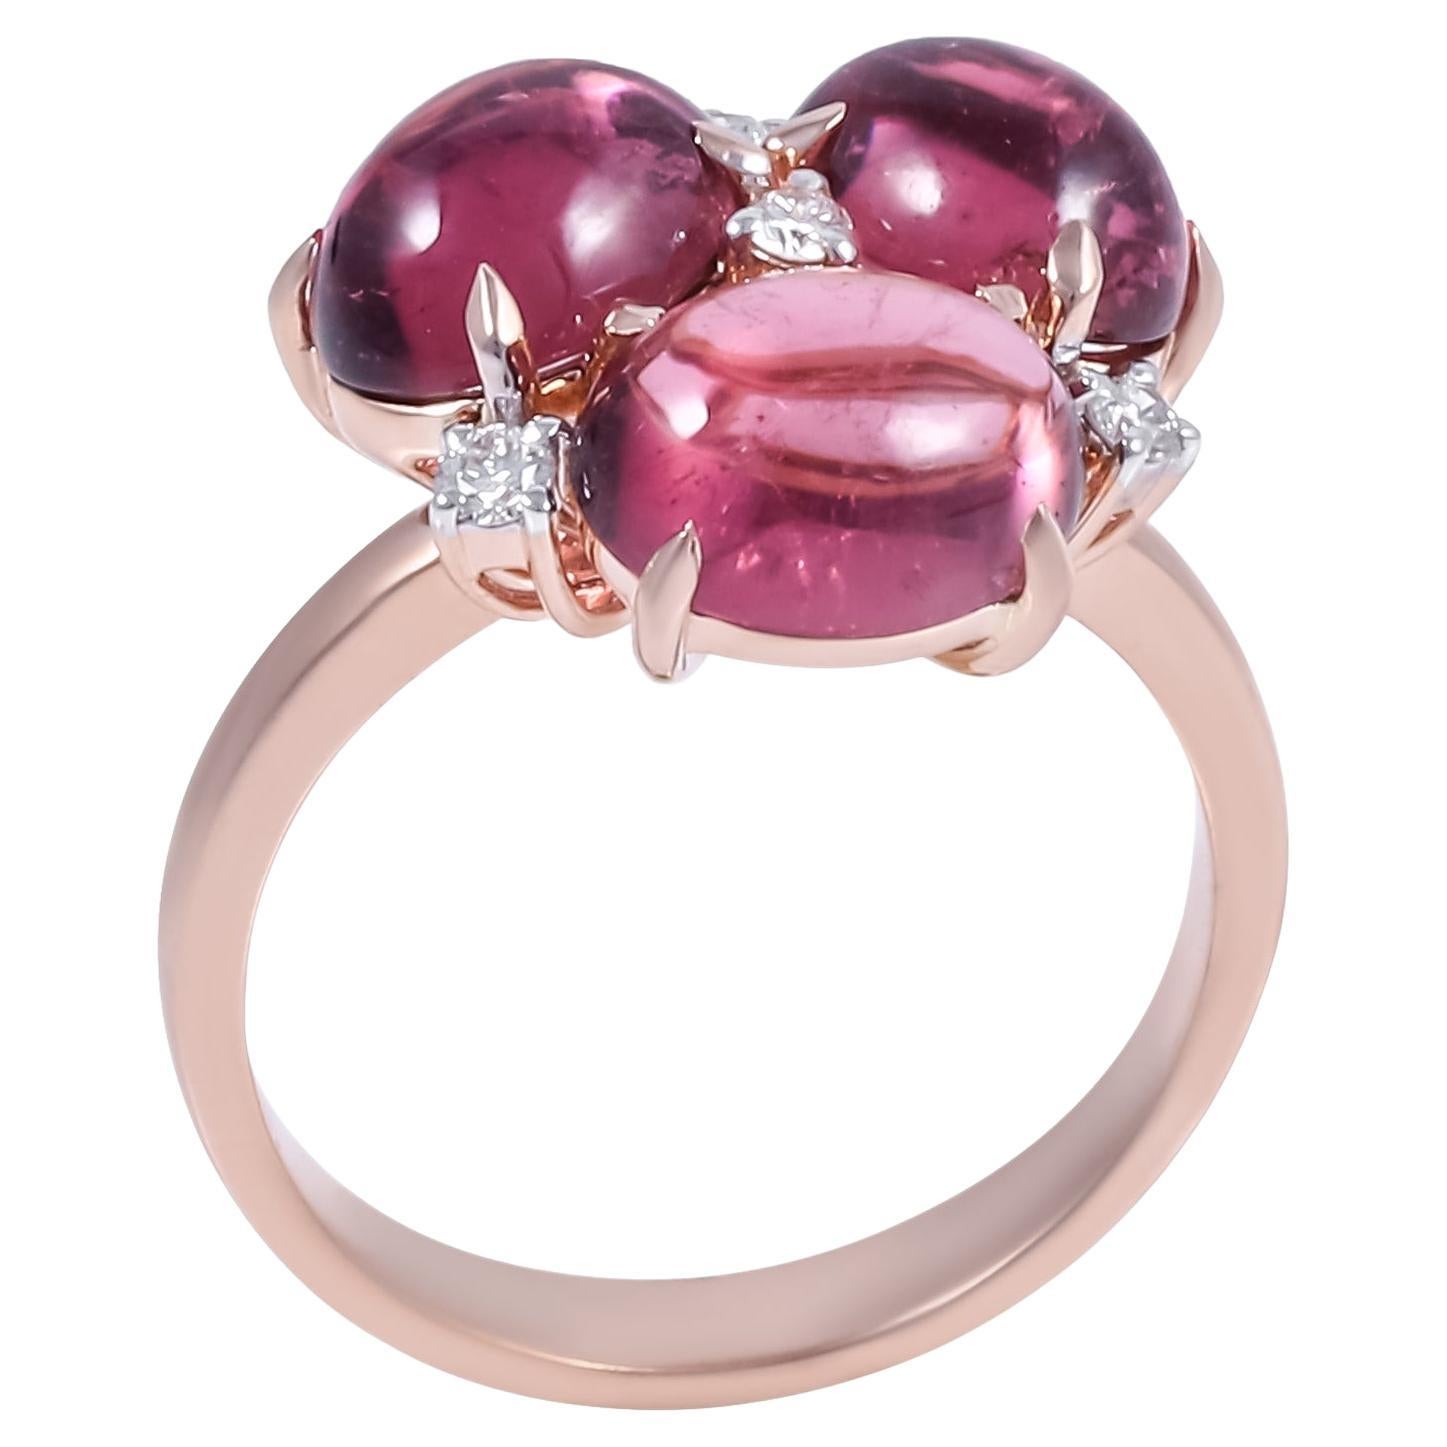 5.92 Carat Trio Pink Tourmaline Ring with 0.13 Carat Diamonds in 18 karat gold For Sale